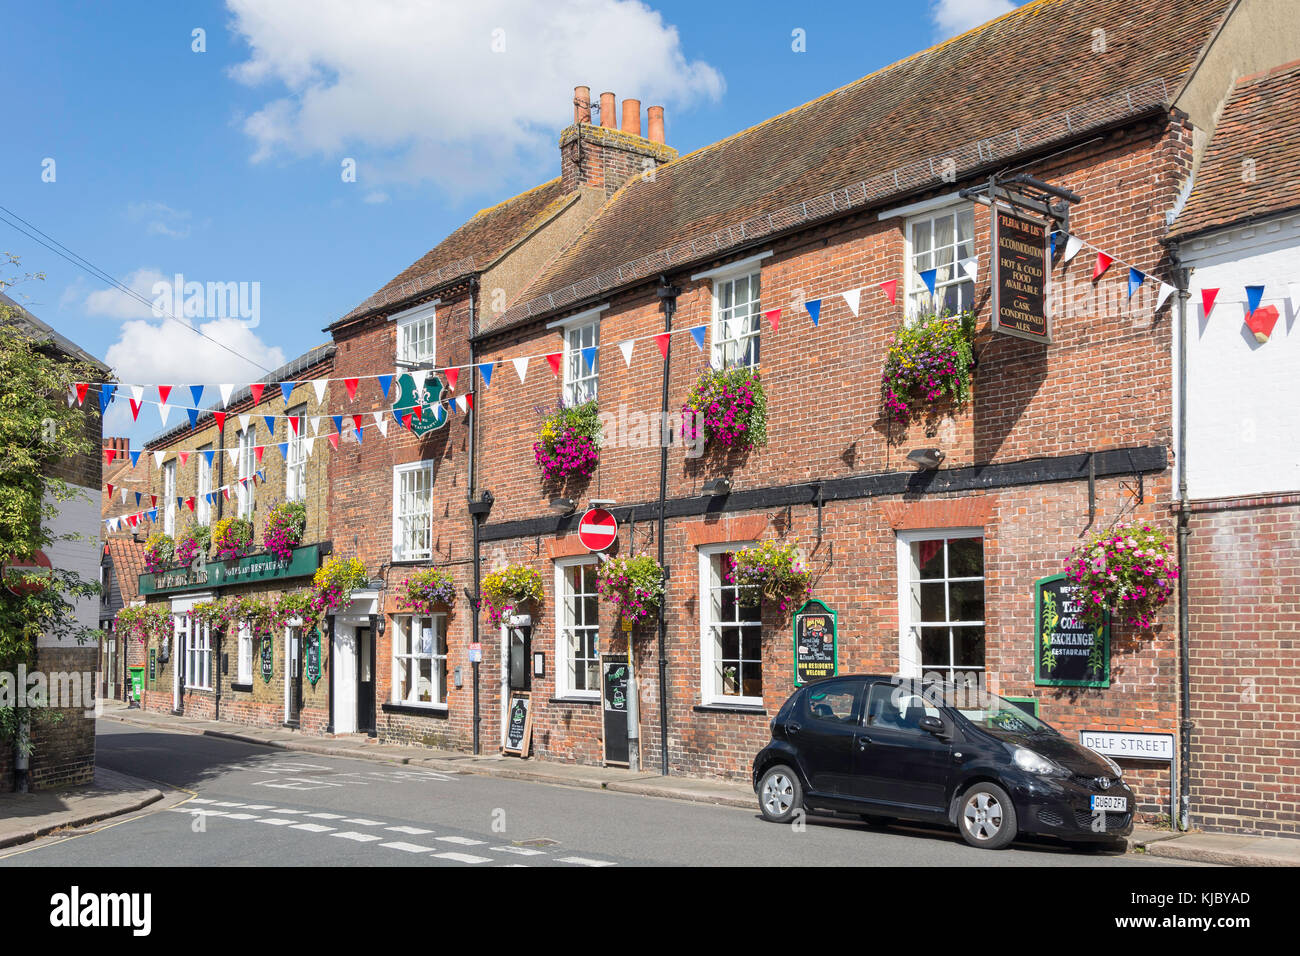 The Fleur de Lis Pub, Delf Street, Sandwich, Kent, England, United Kingdom Stock Photo